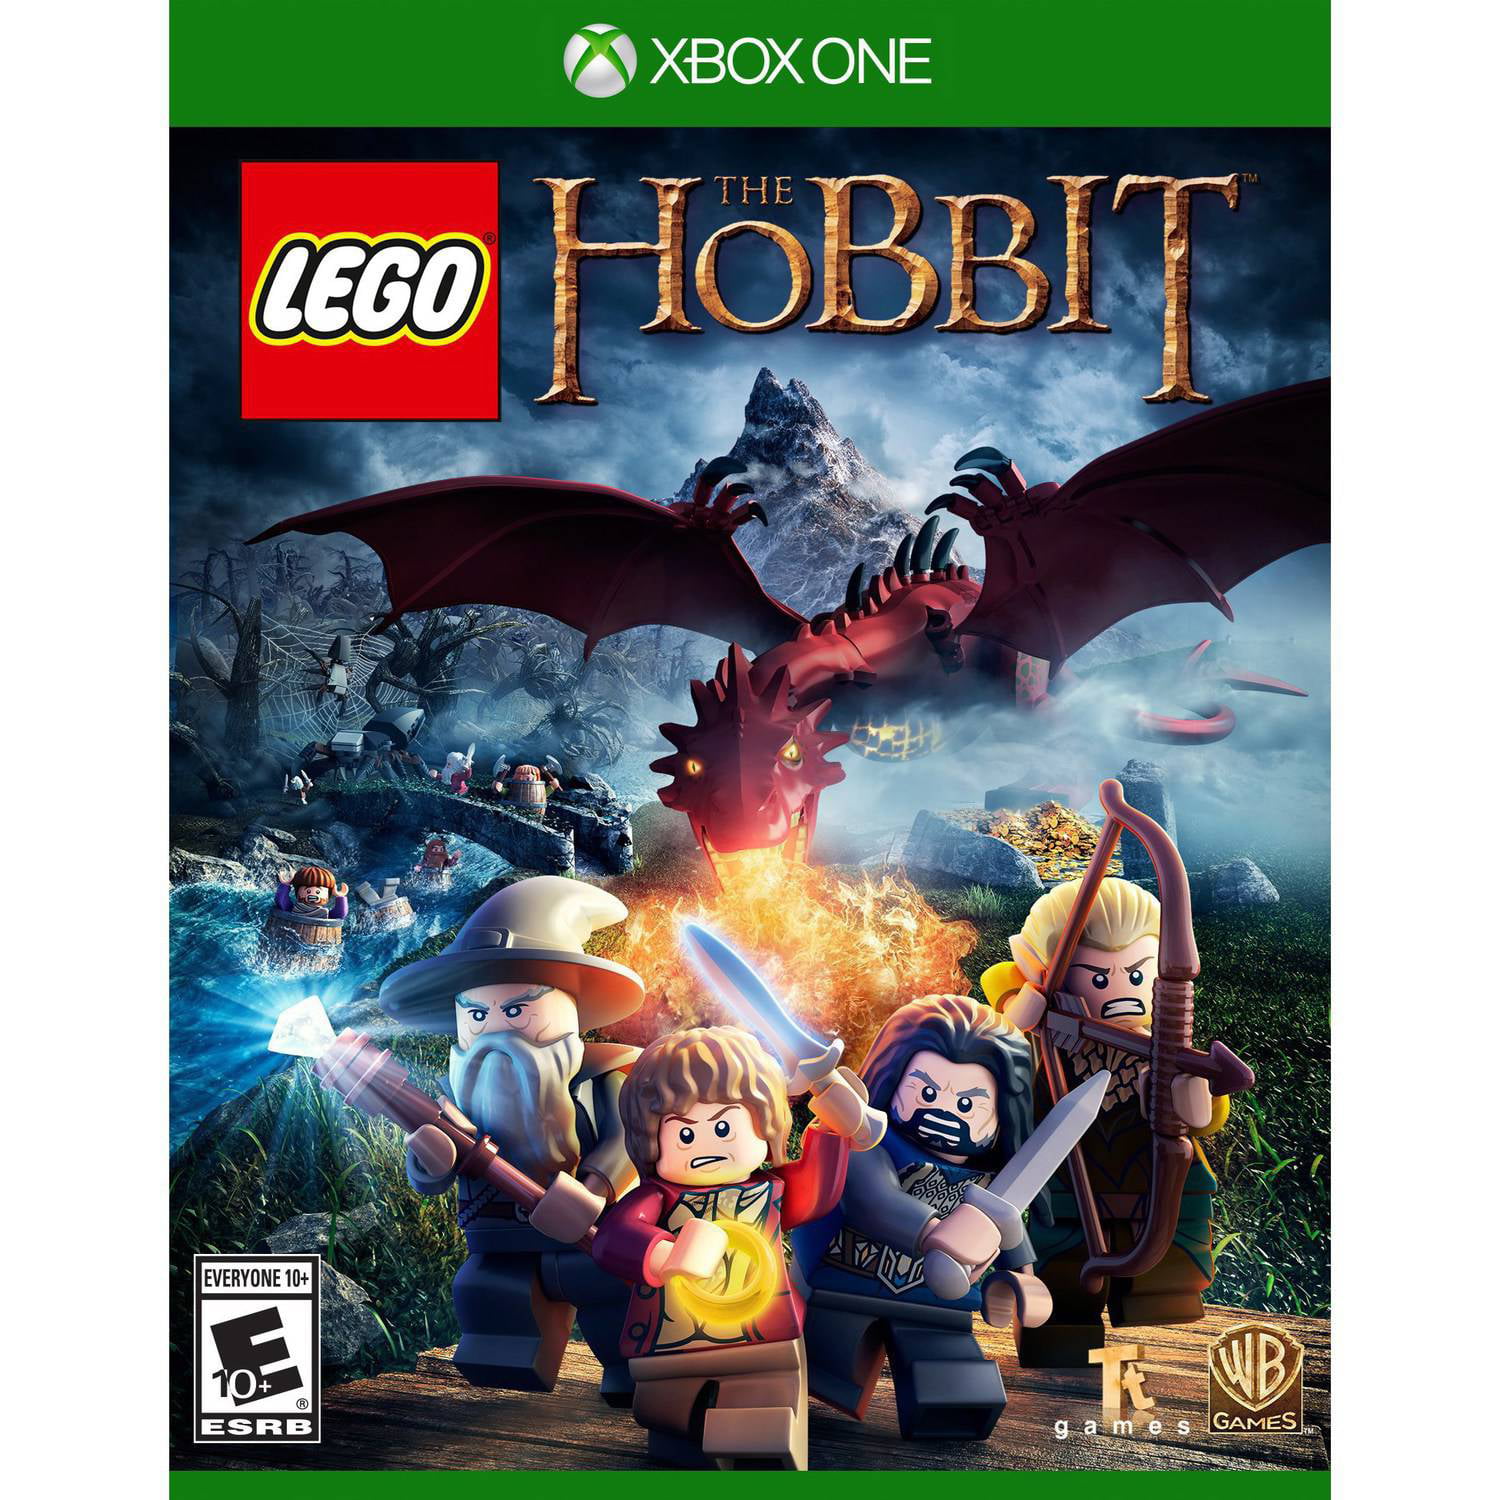 LEGO The Hobbit (Xbox One) - Walmart.com - Walmart.com